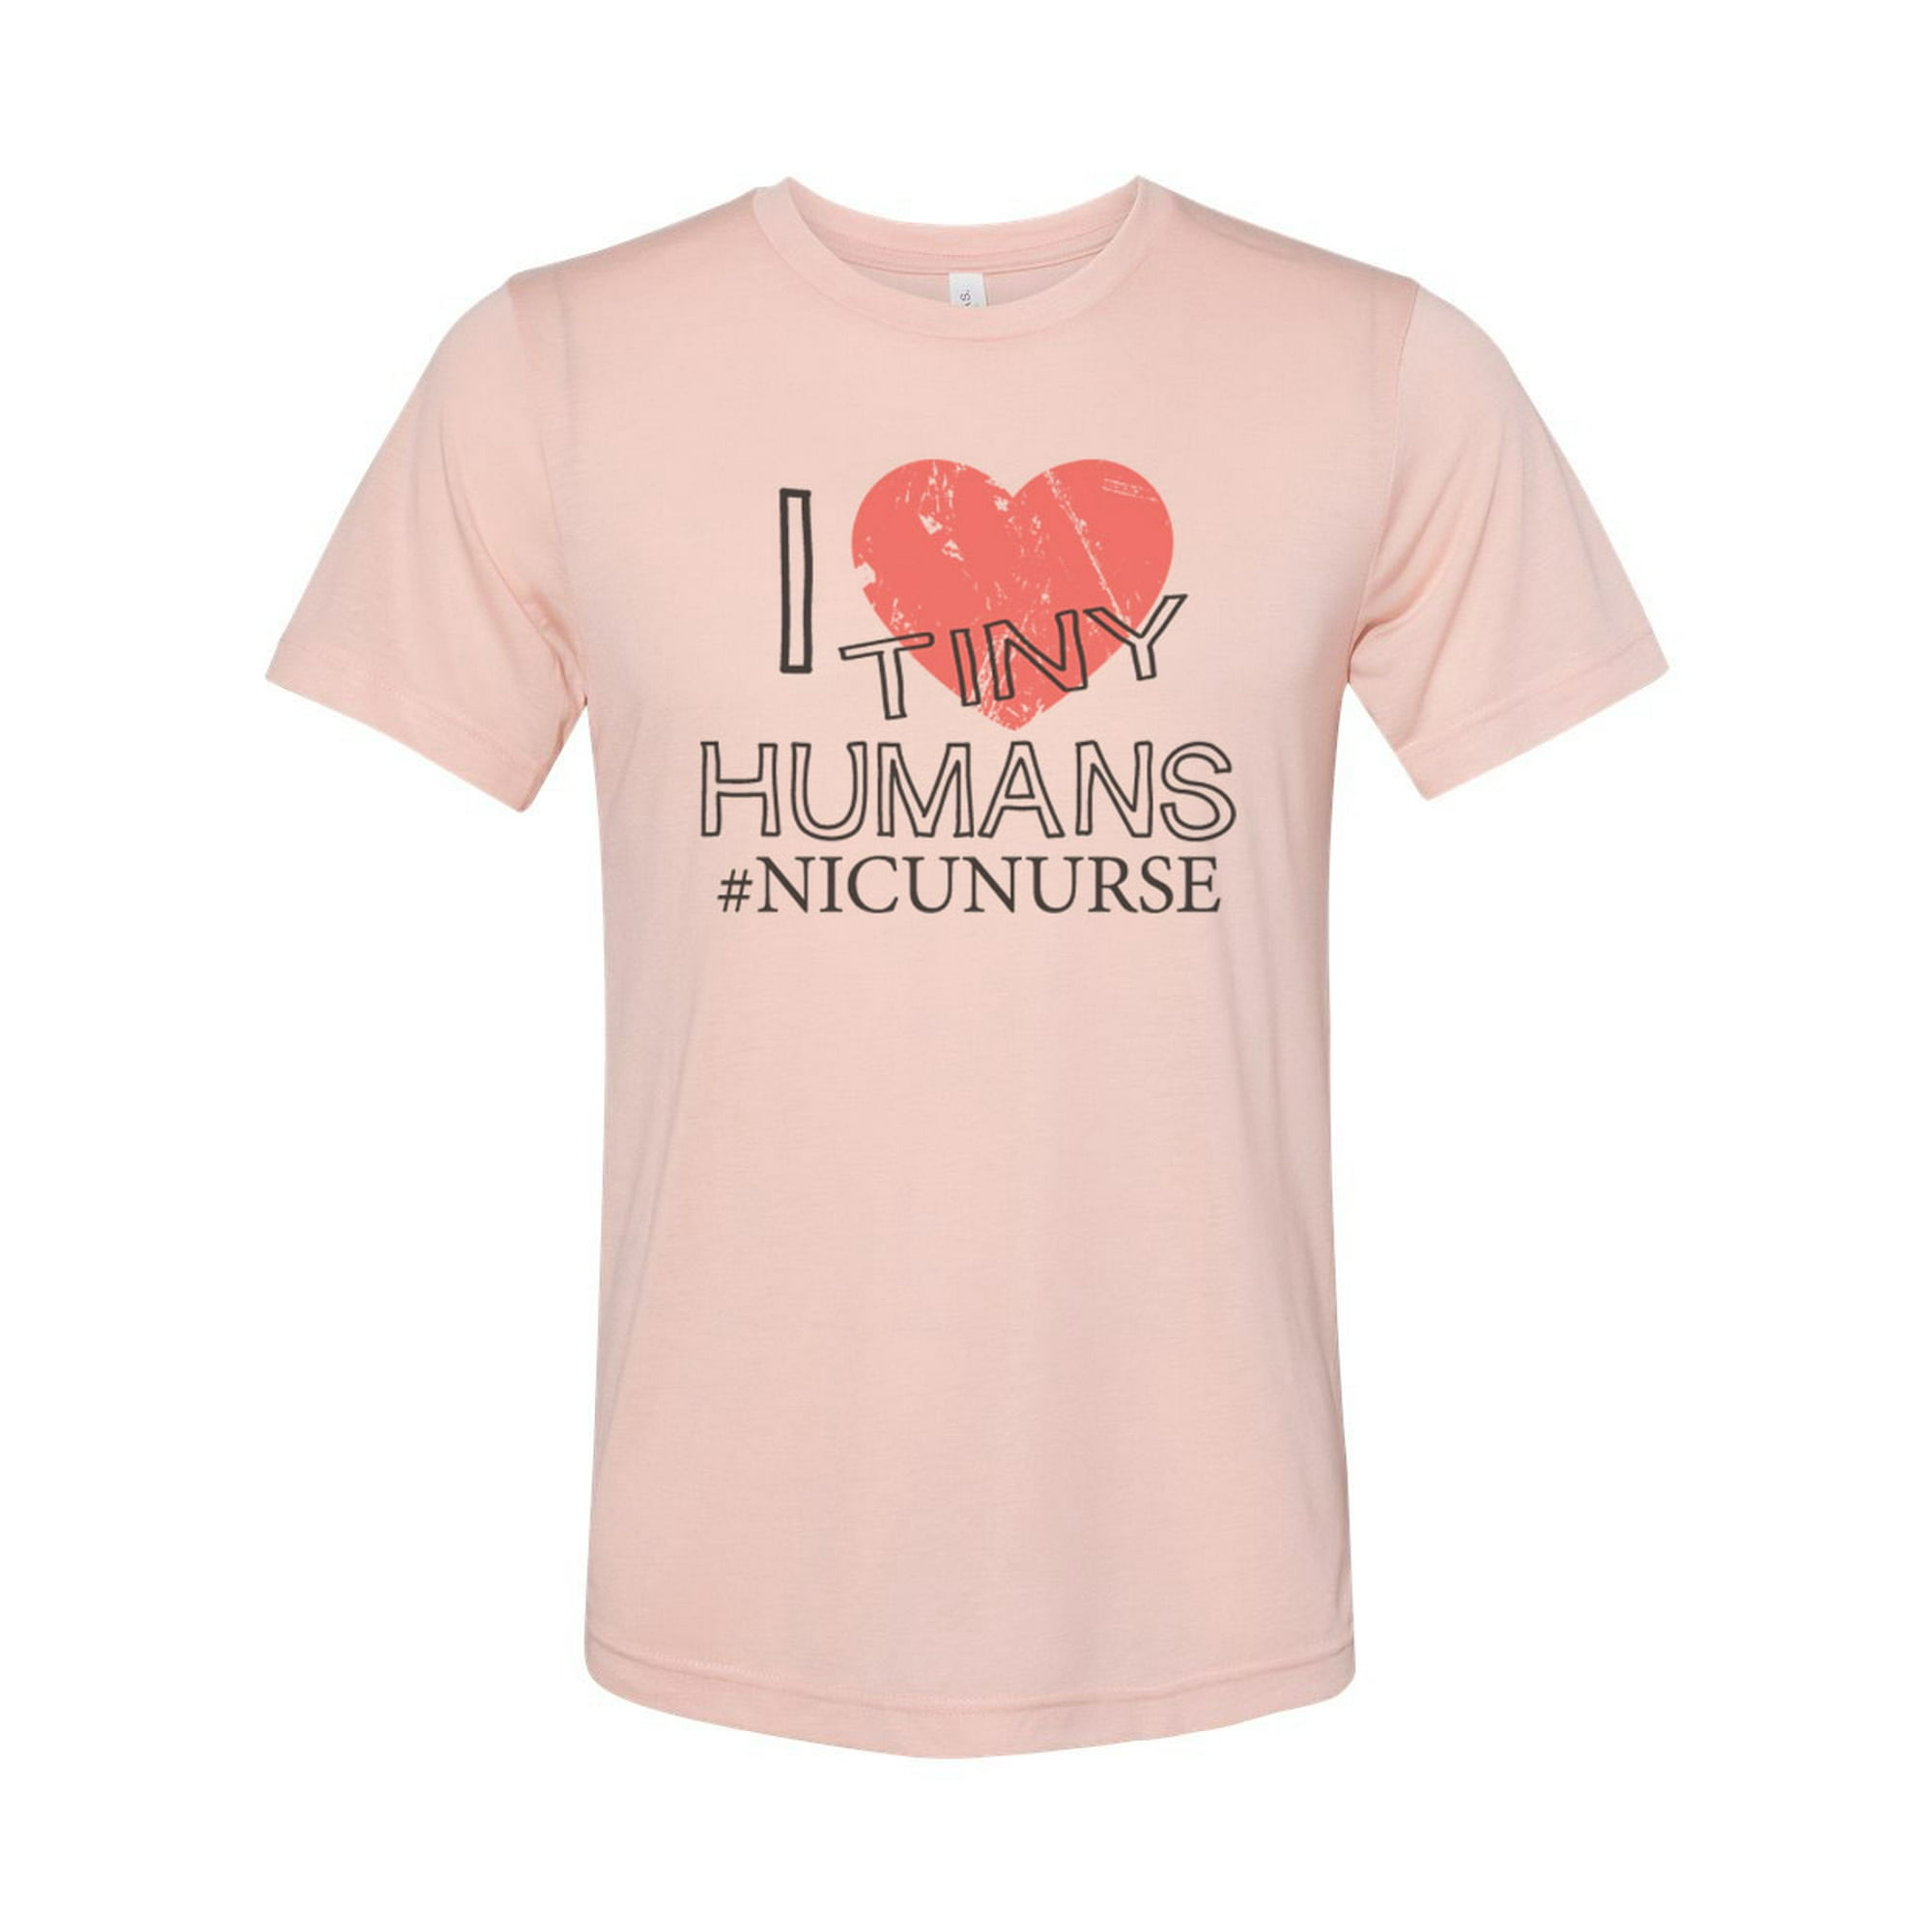 NICU Nurse Heart - Nicu Nurse - T-Shirt